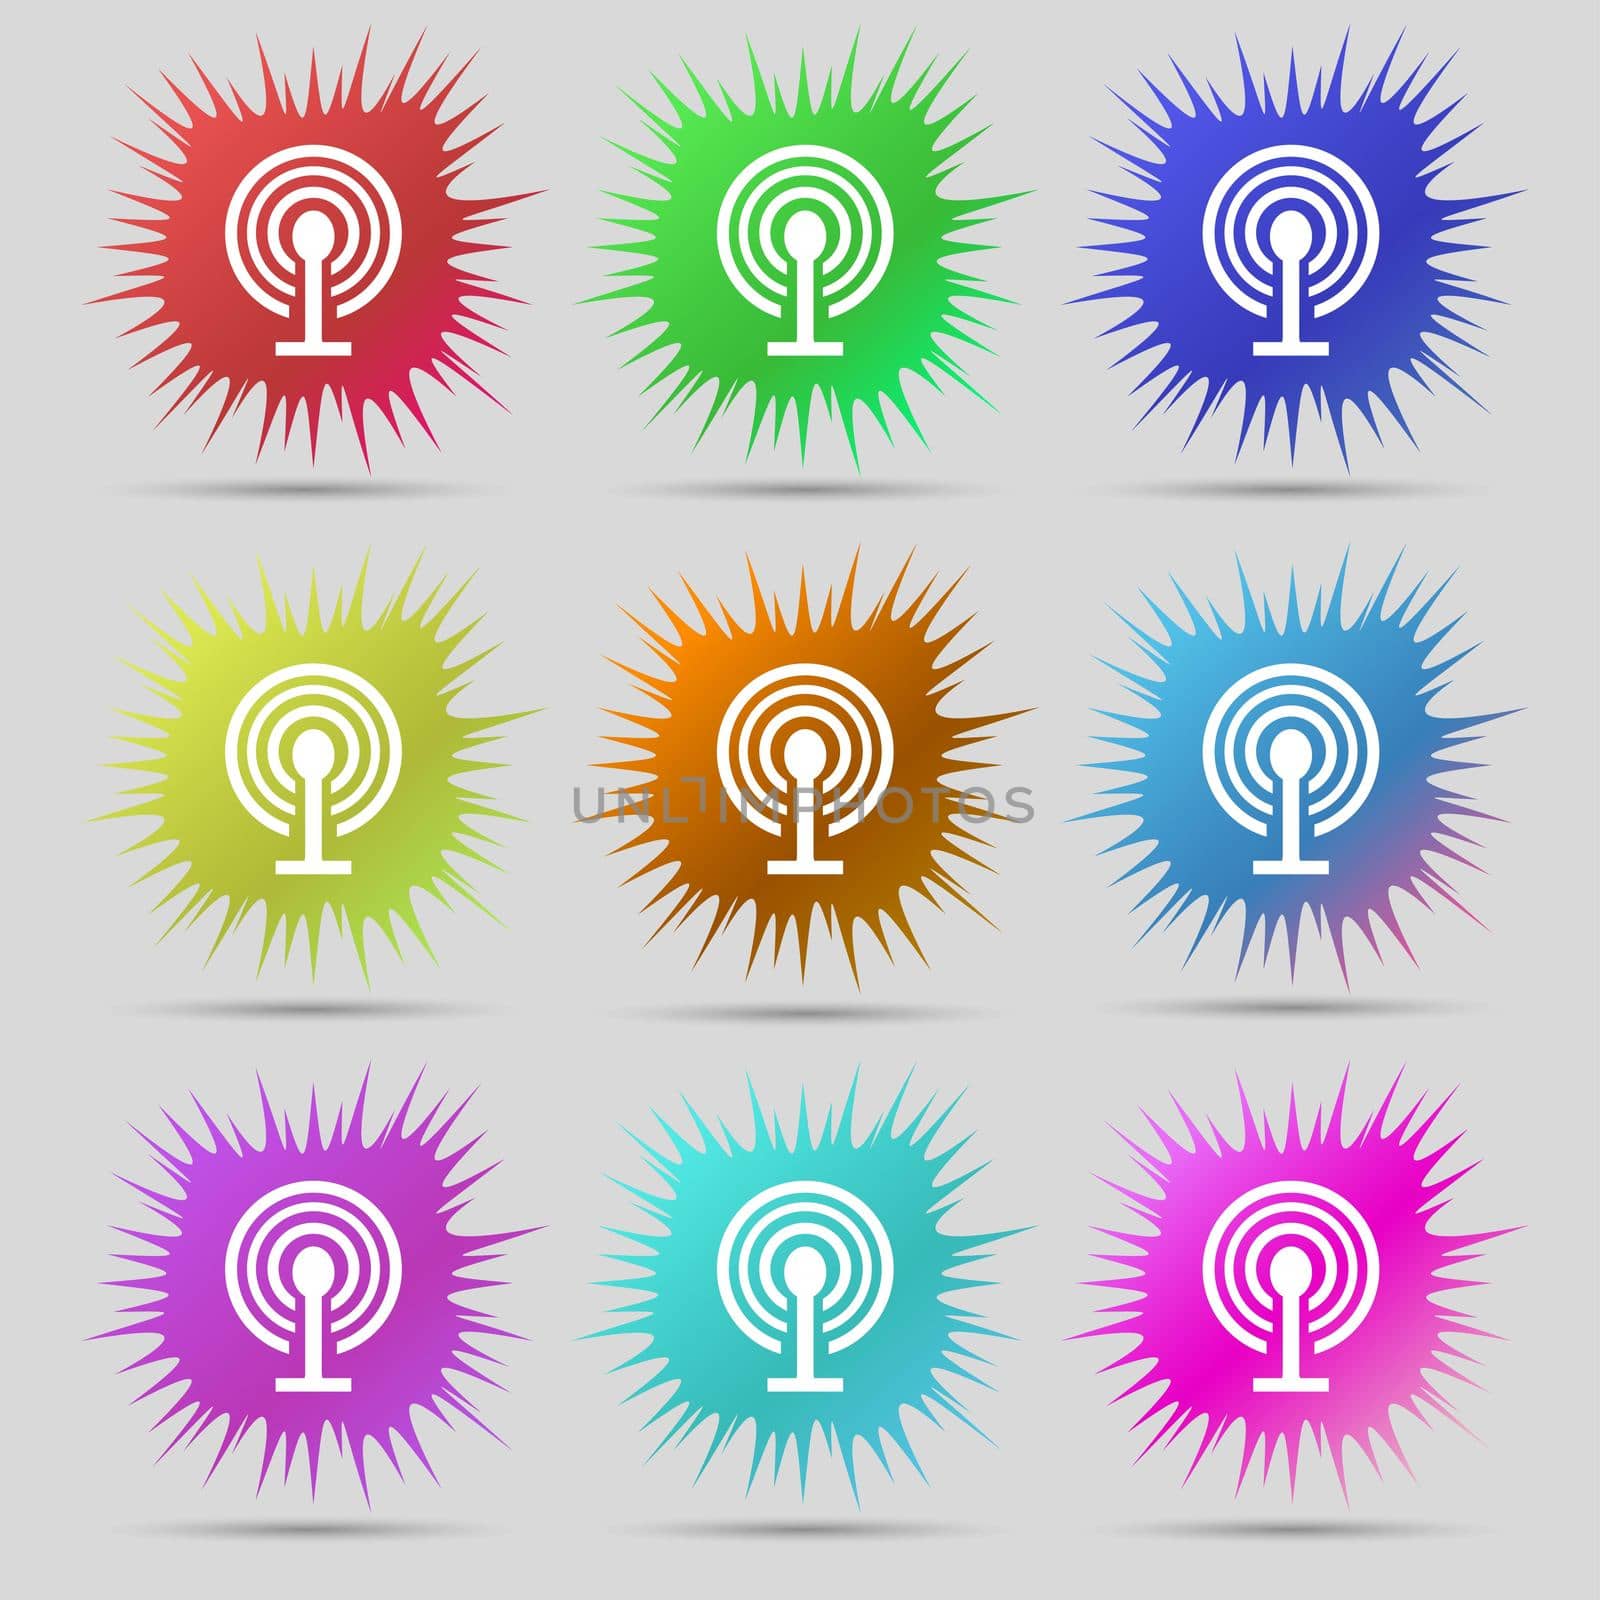 Wifi sign. Wi-fi symbol. Wireless Network icon zone. Nine original needle buttons. illustration. Raster version